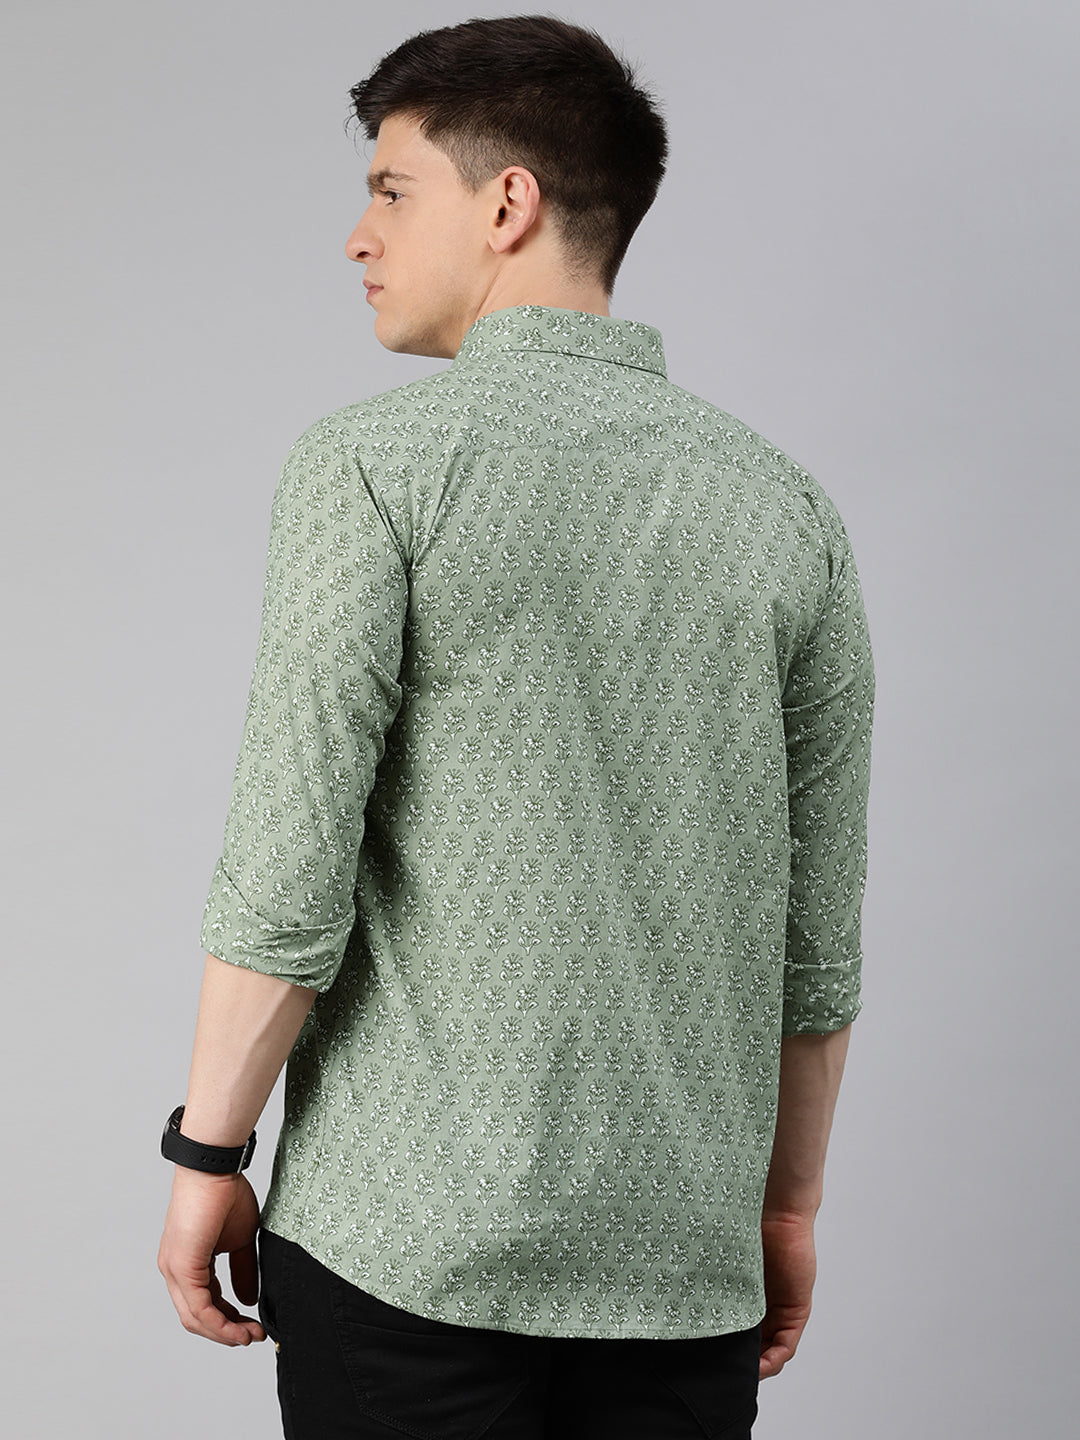 Green Cotton Full Sleeves Shirts For Men-MMF029 - NOZ2TOZ